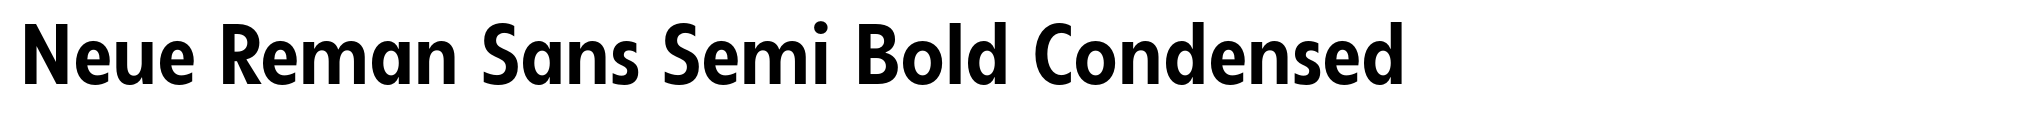 Neue Reman Sans Semi Bold Condensed image